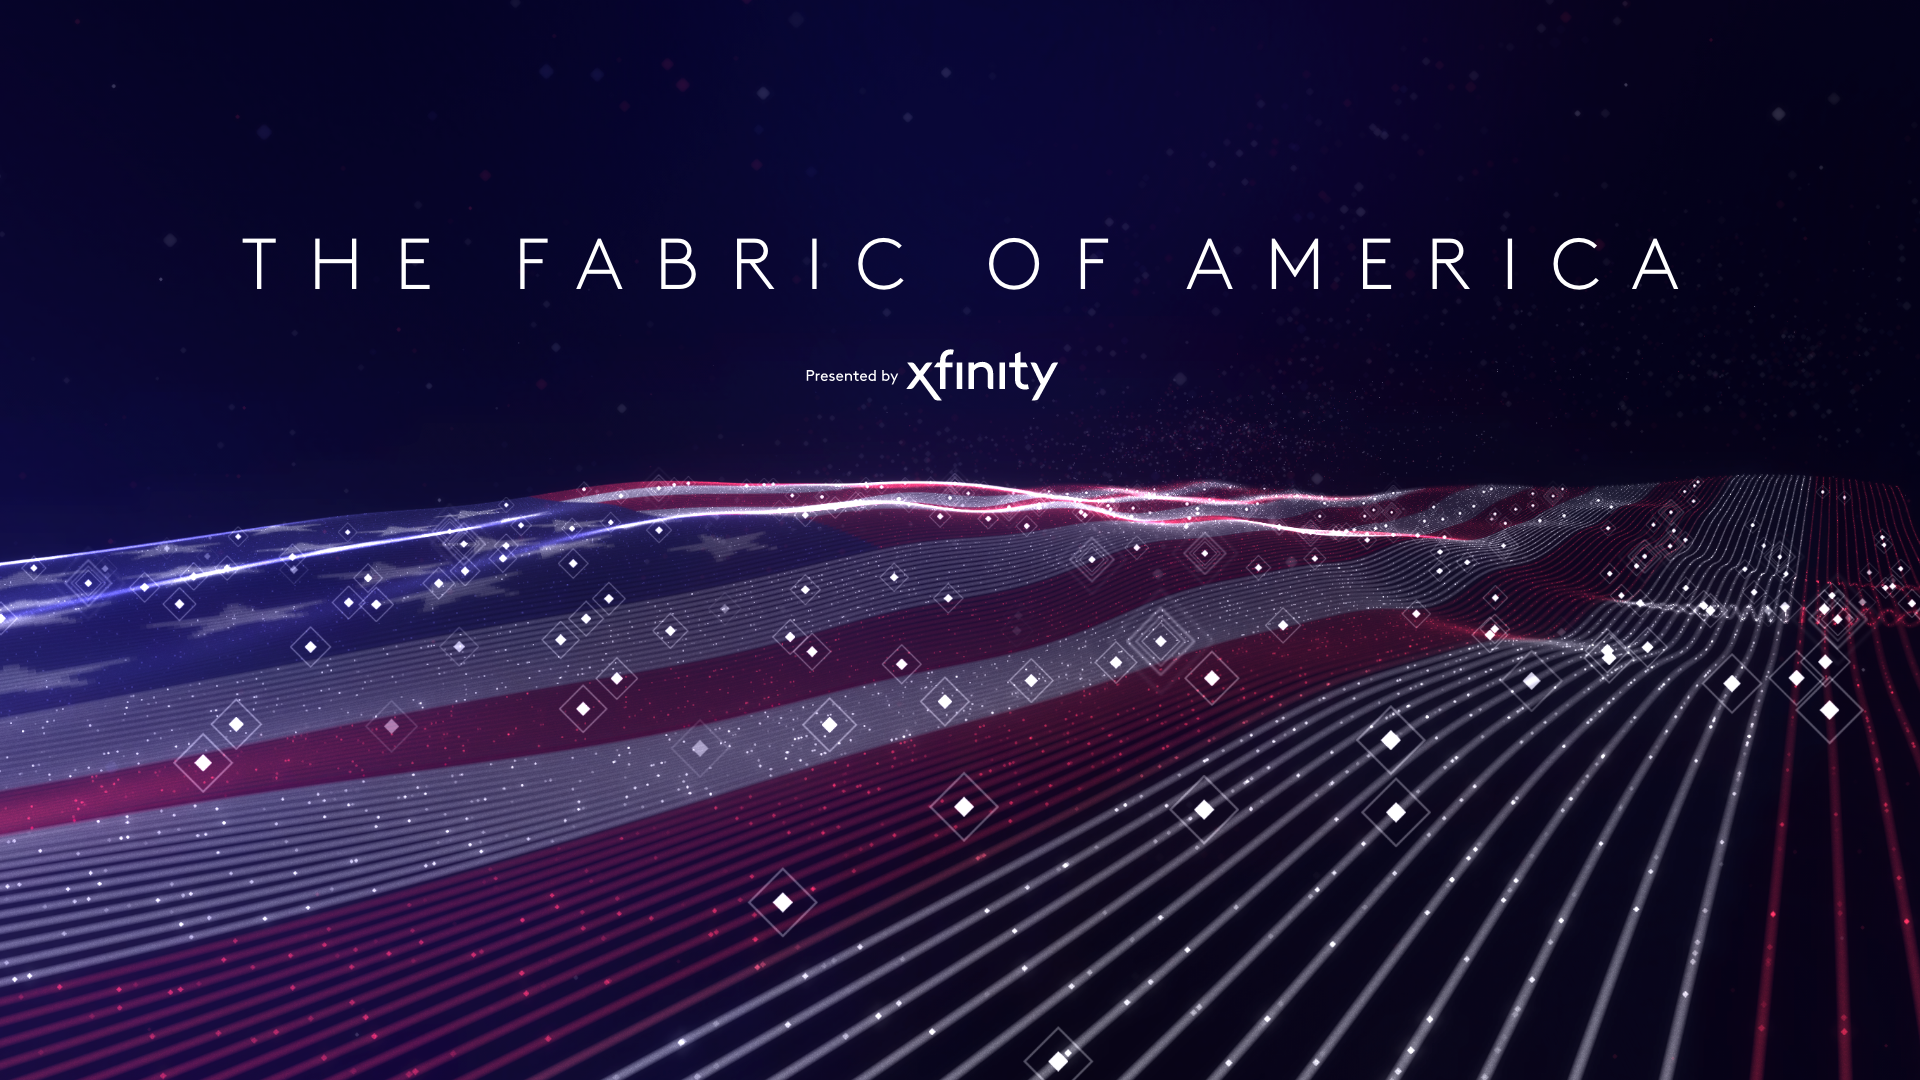 Xfinity'sThe Fabric of America